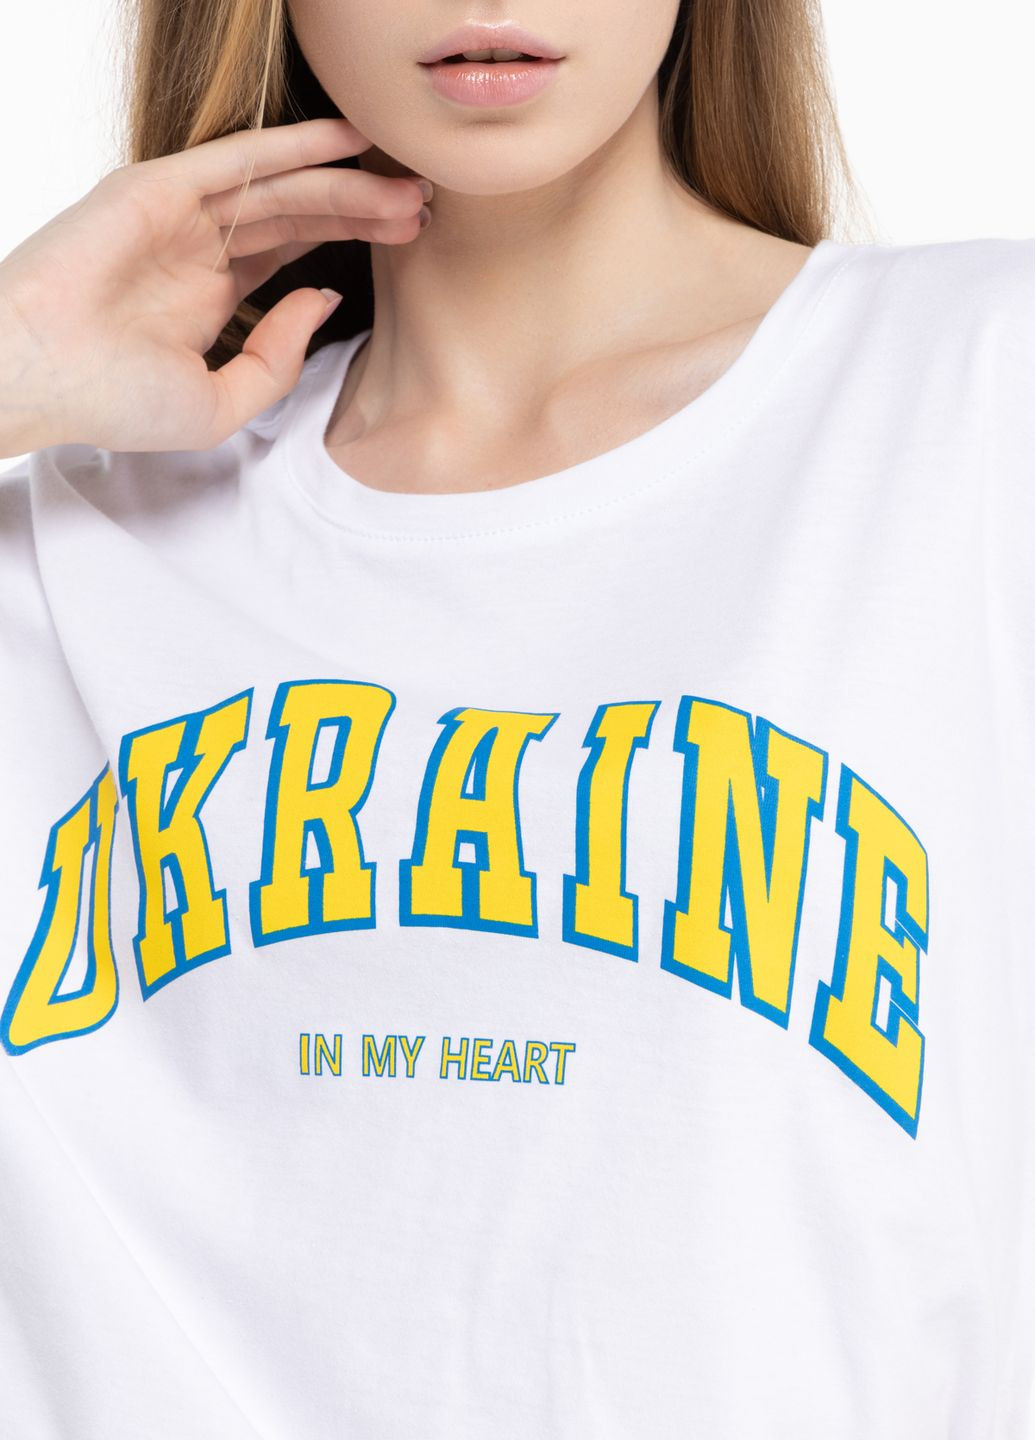 Белая летняя футболка "ukraine in my heart" On mee